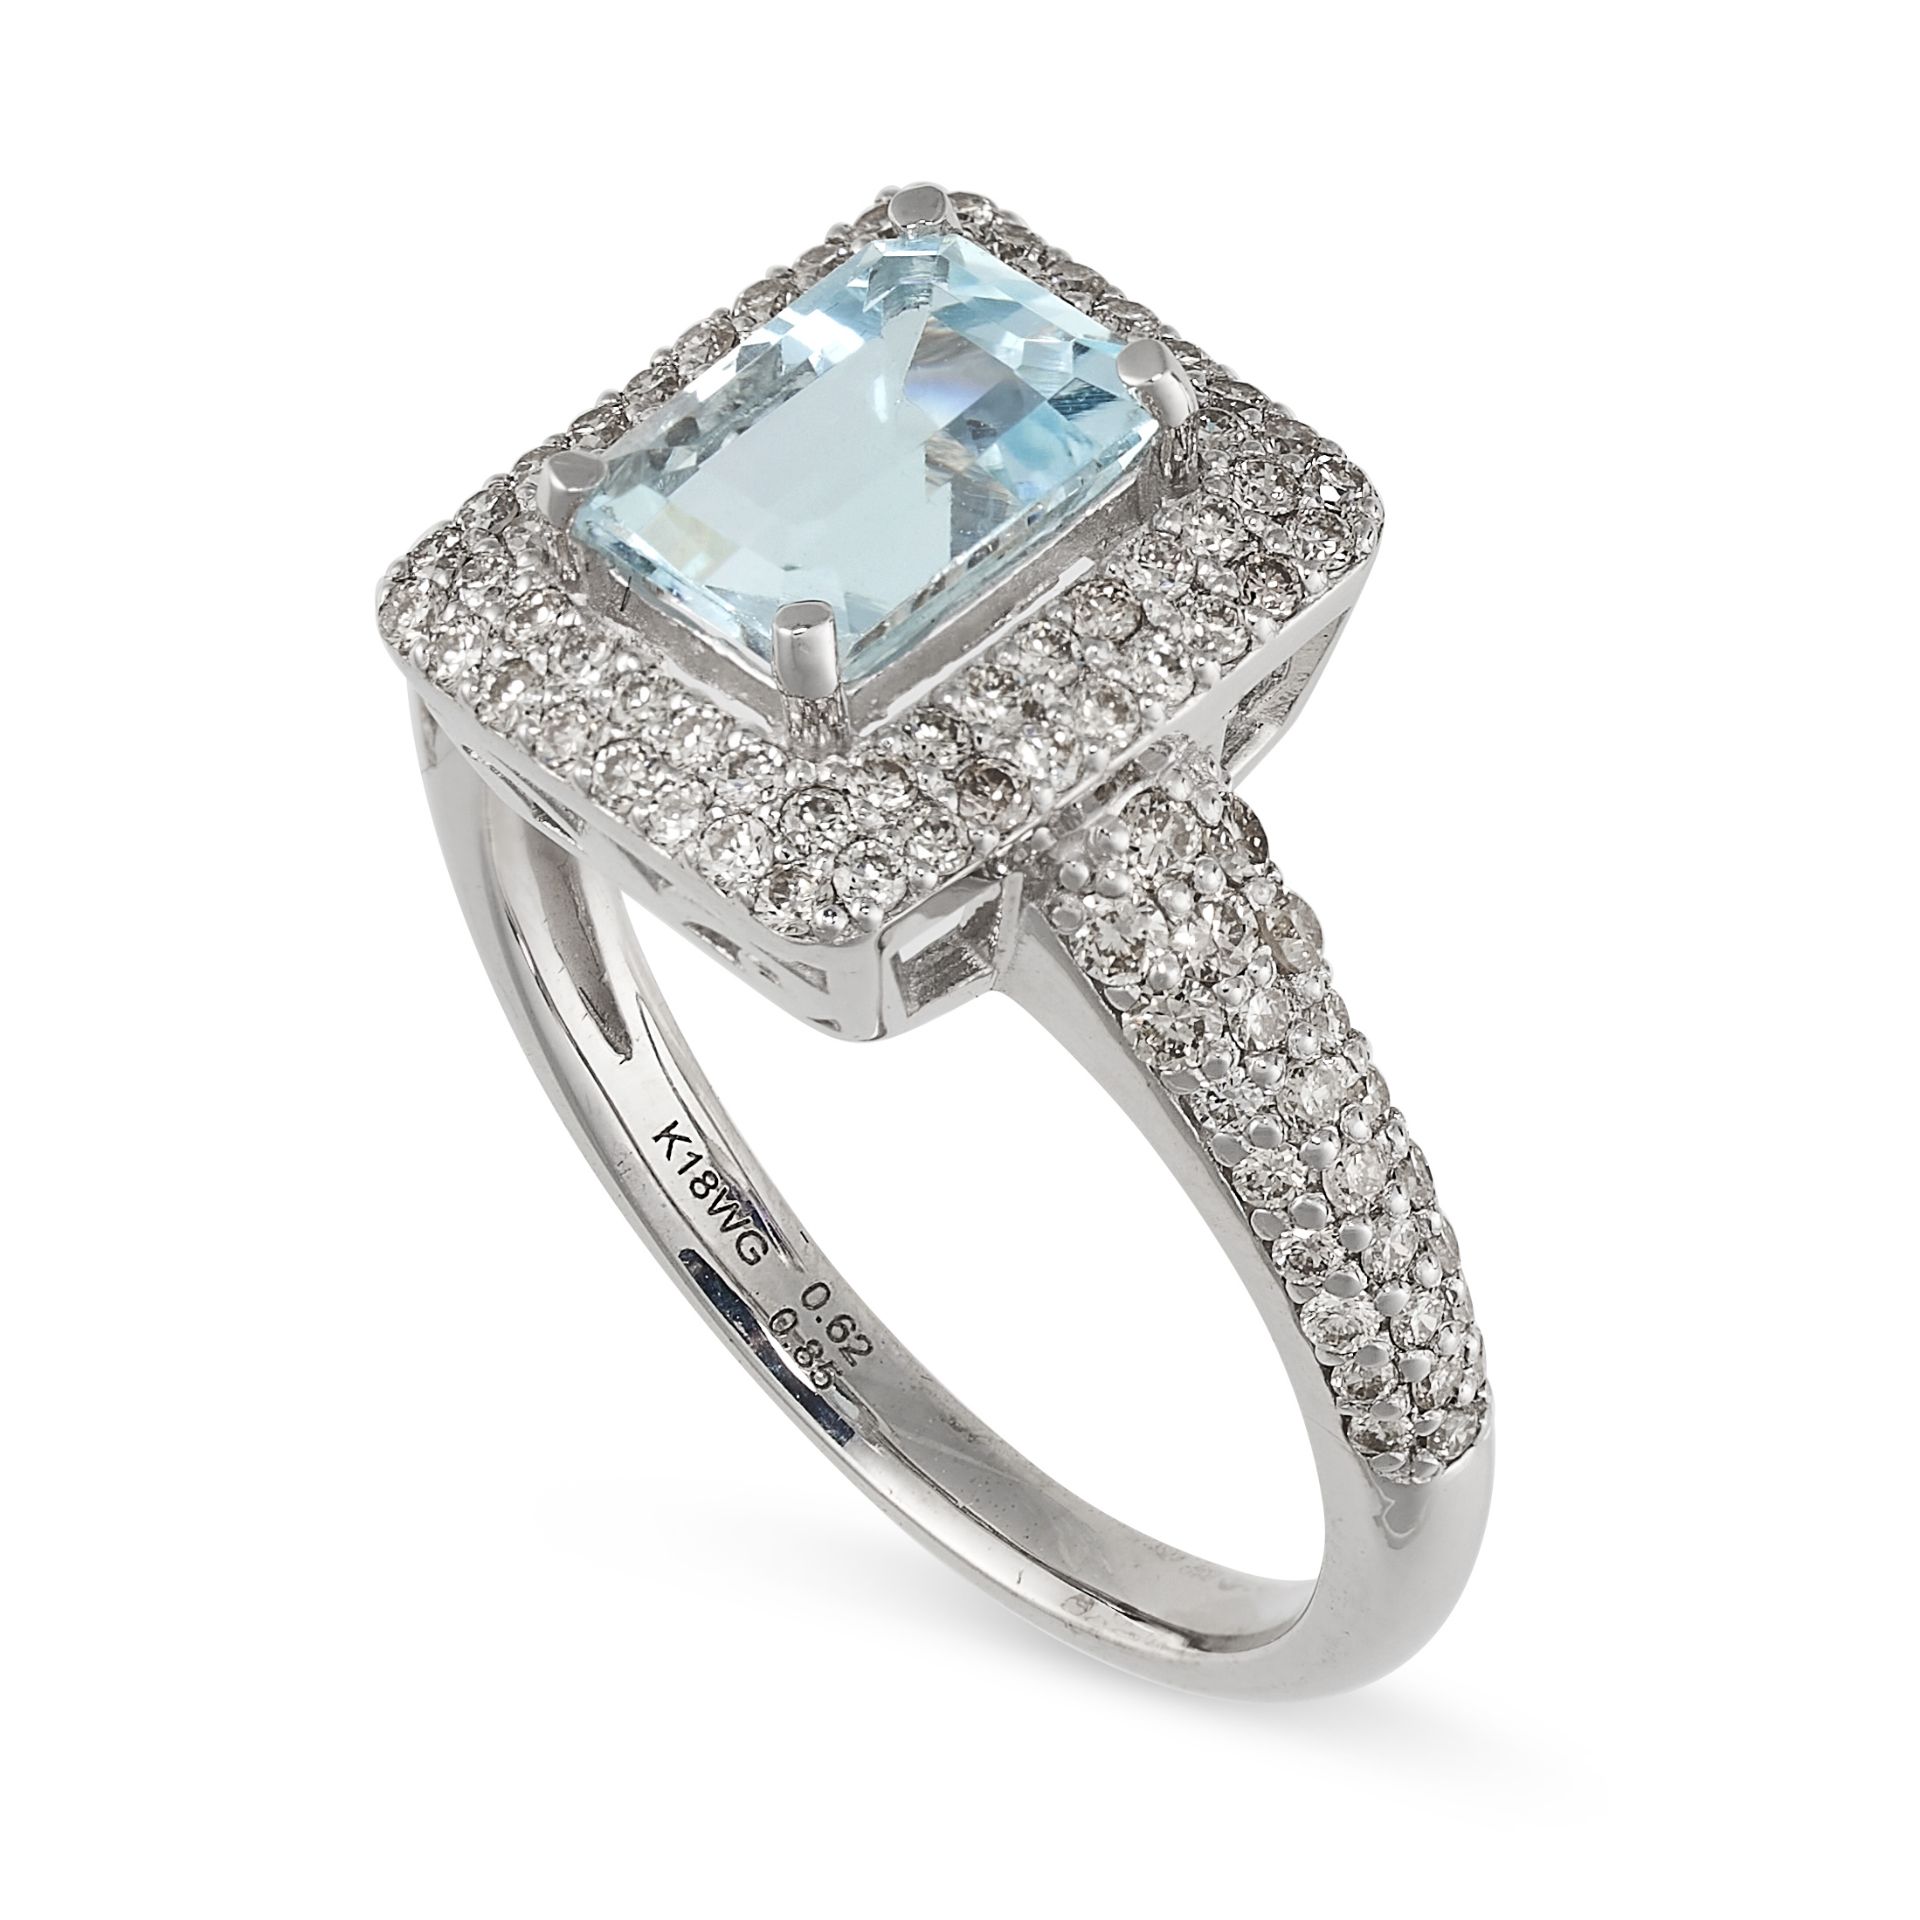 AN AQUAMARINE AND DIAMOND CLUSTER RING  Step-cut aquamarine, 0.85 carats  Brilliant-cut diamonds, - Image 2 of 2